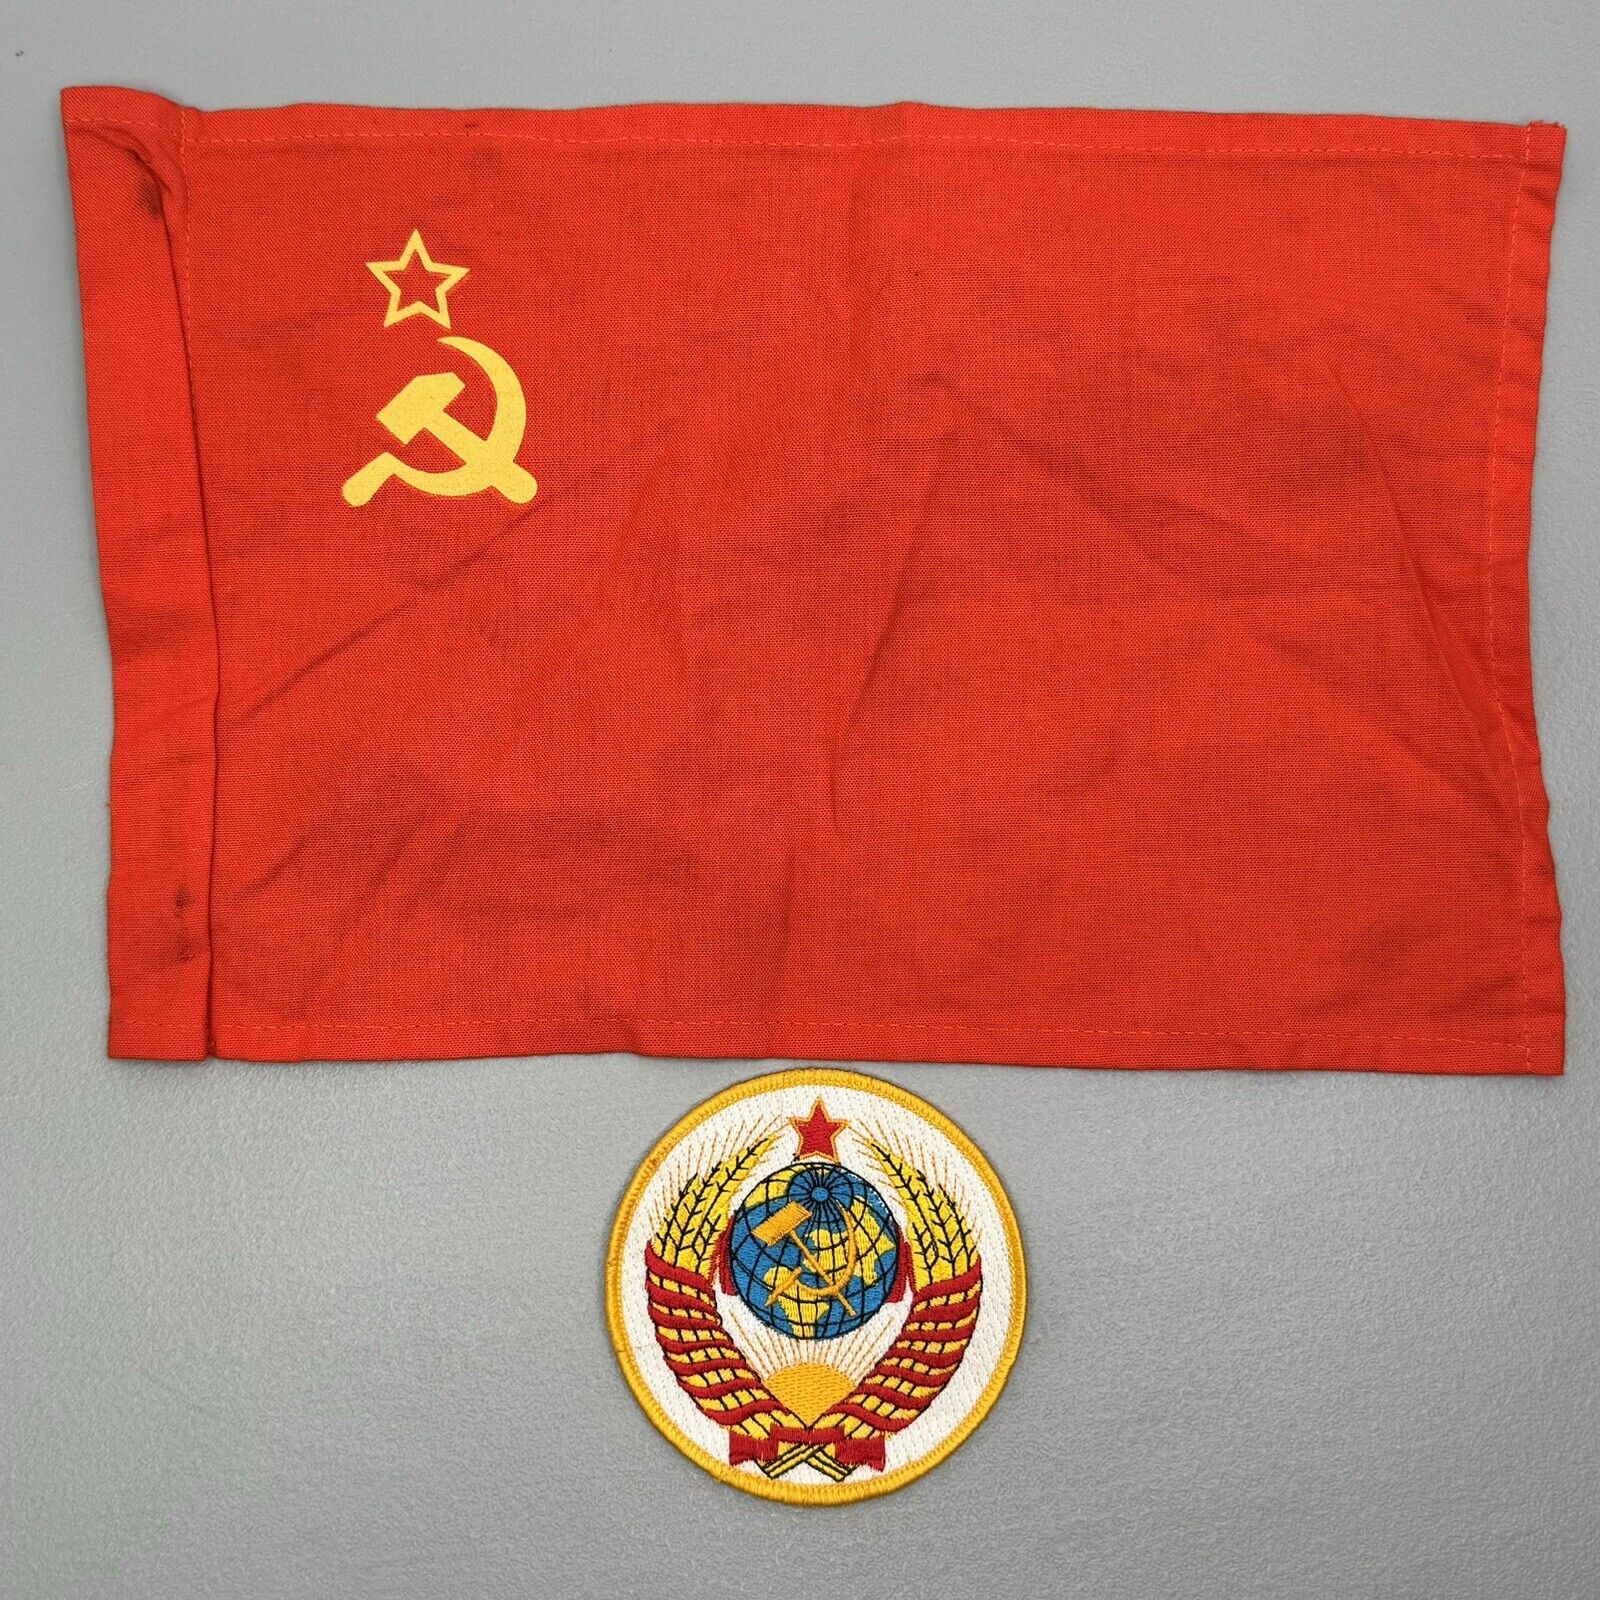 Rare Lot Russian Soviet Large Star Seal CCCP Space Program Patch National Emblem